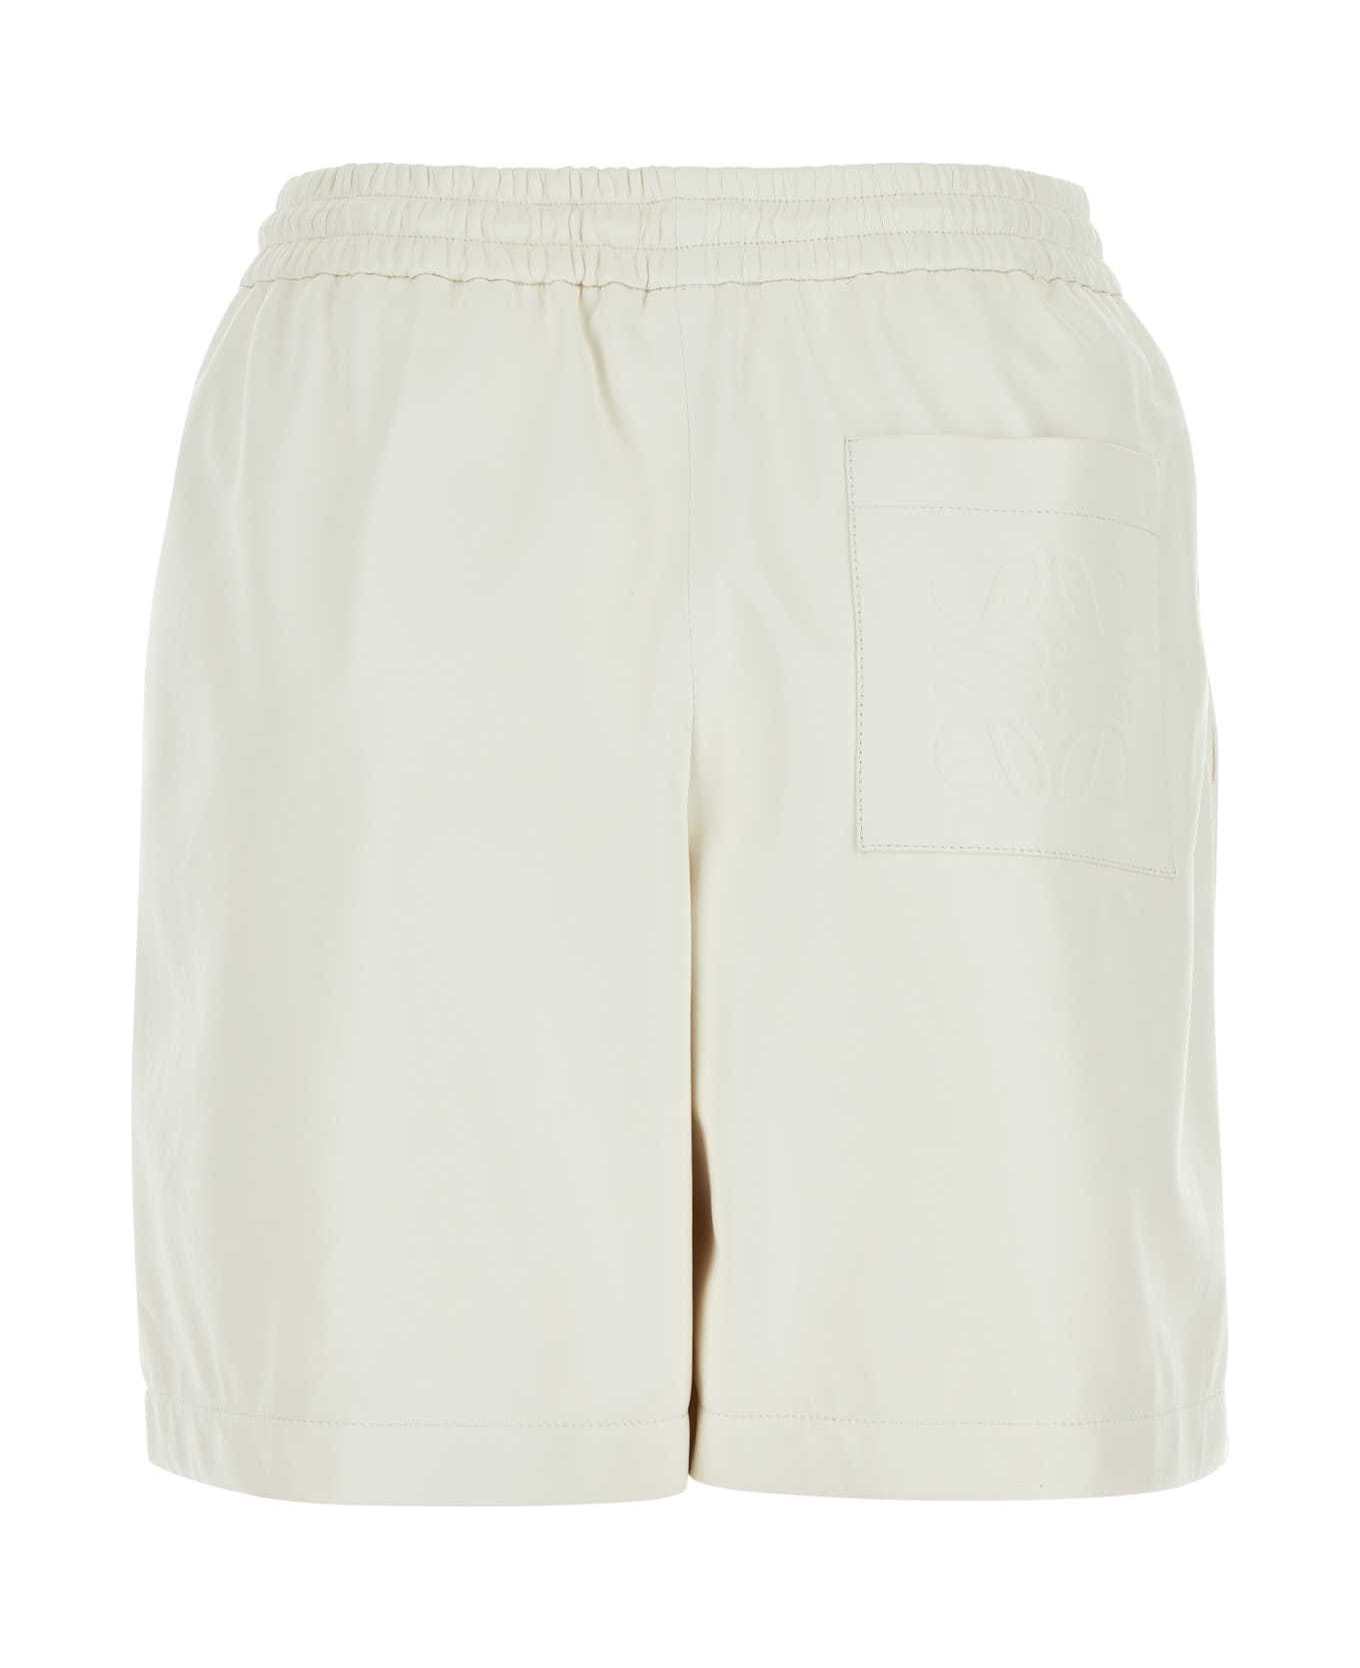 Loewe White Leather Shorts - WHITE ショートパンツ